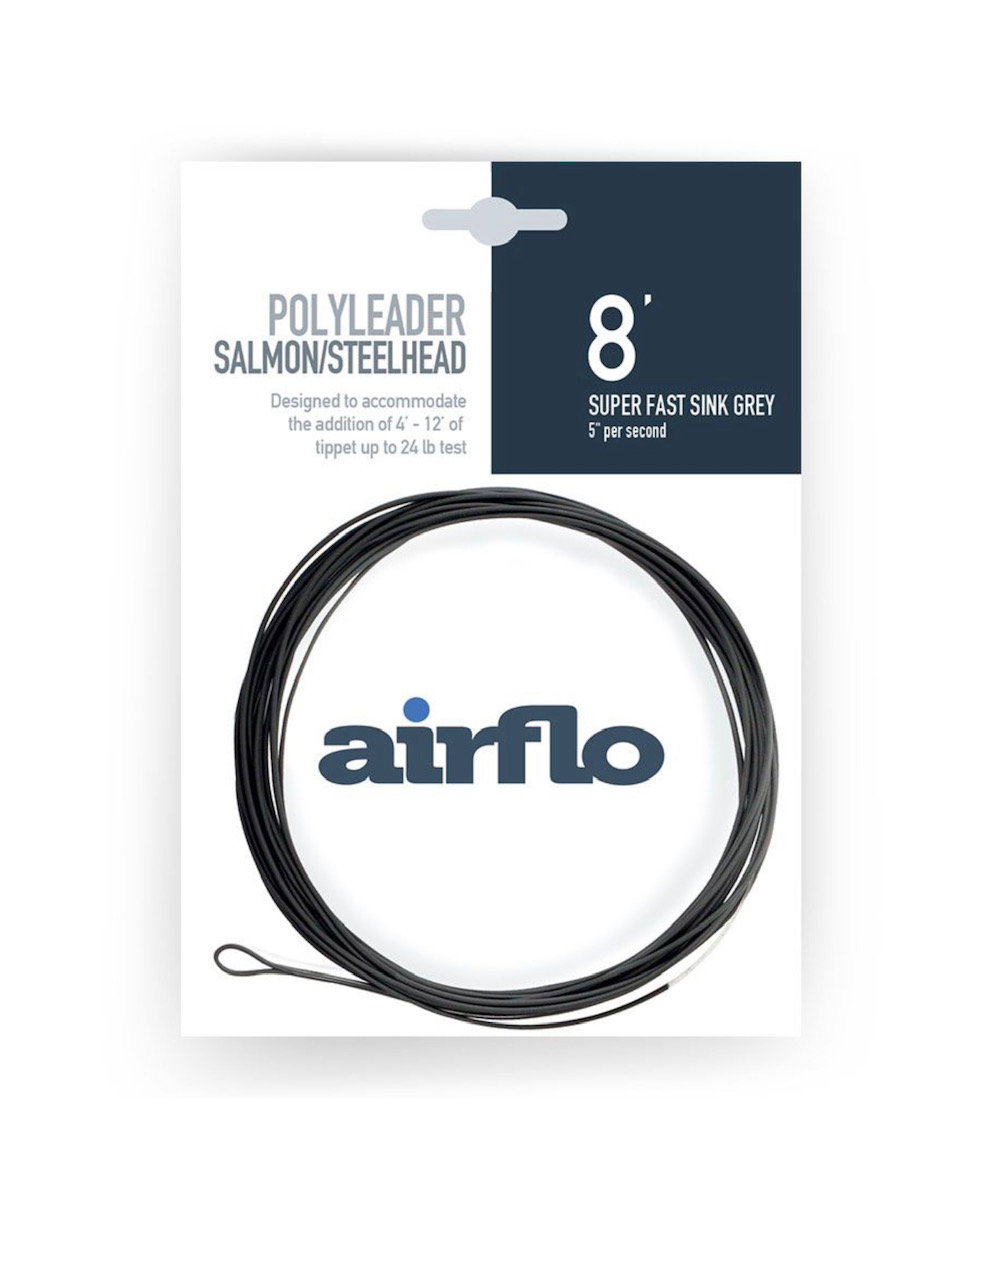 Airflo Polyleader Salmon/Steelhead  - 5' - Extra Fast Sink (7ips)